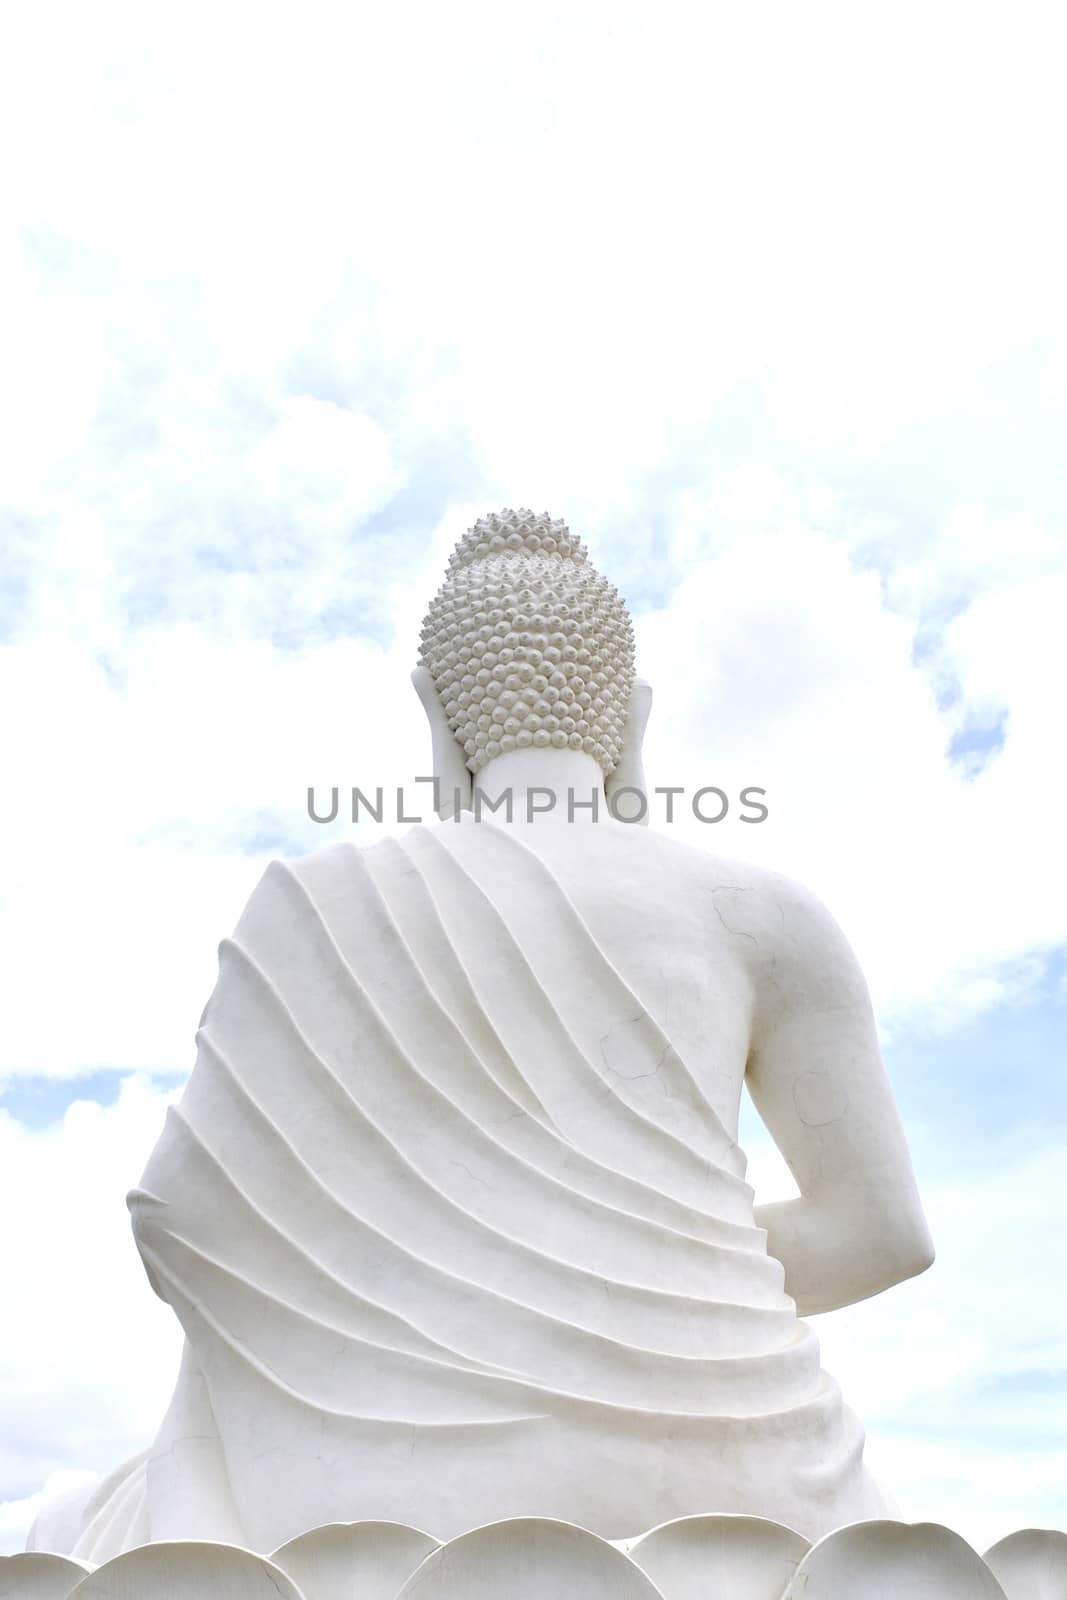 Buddha- Worshiper of Non Violence by ravindrabhu165165@gmail.com